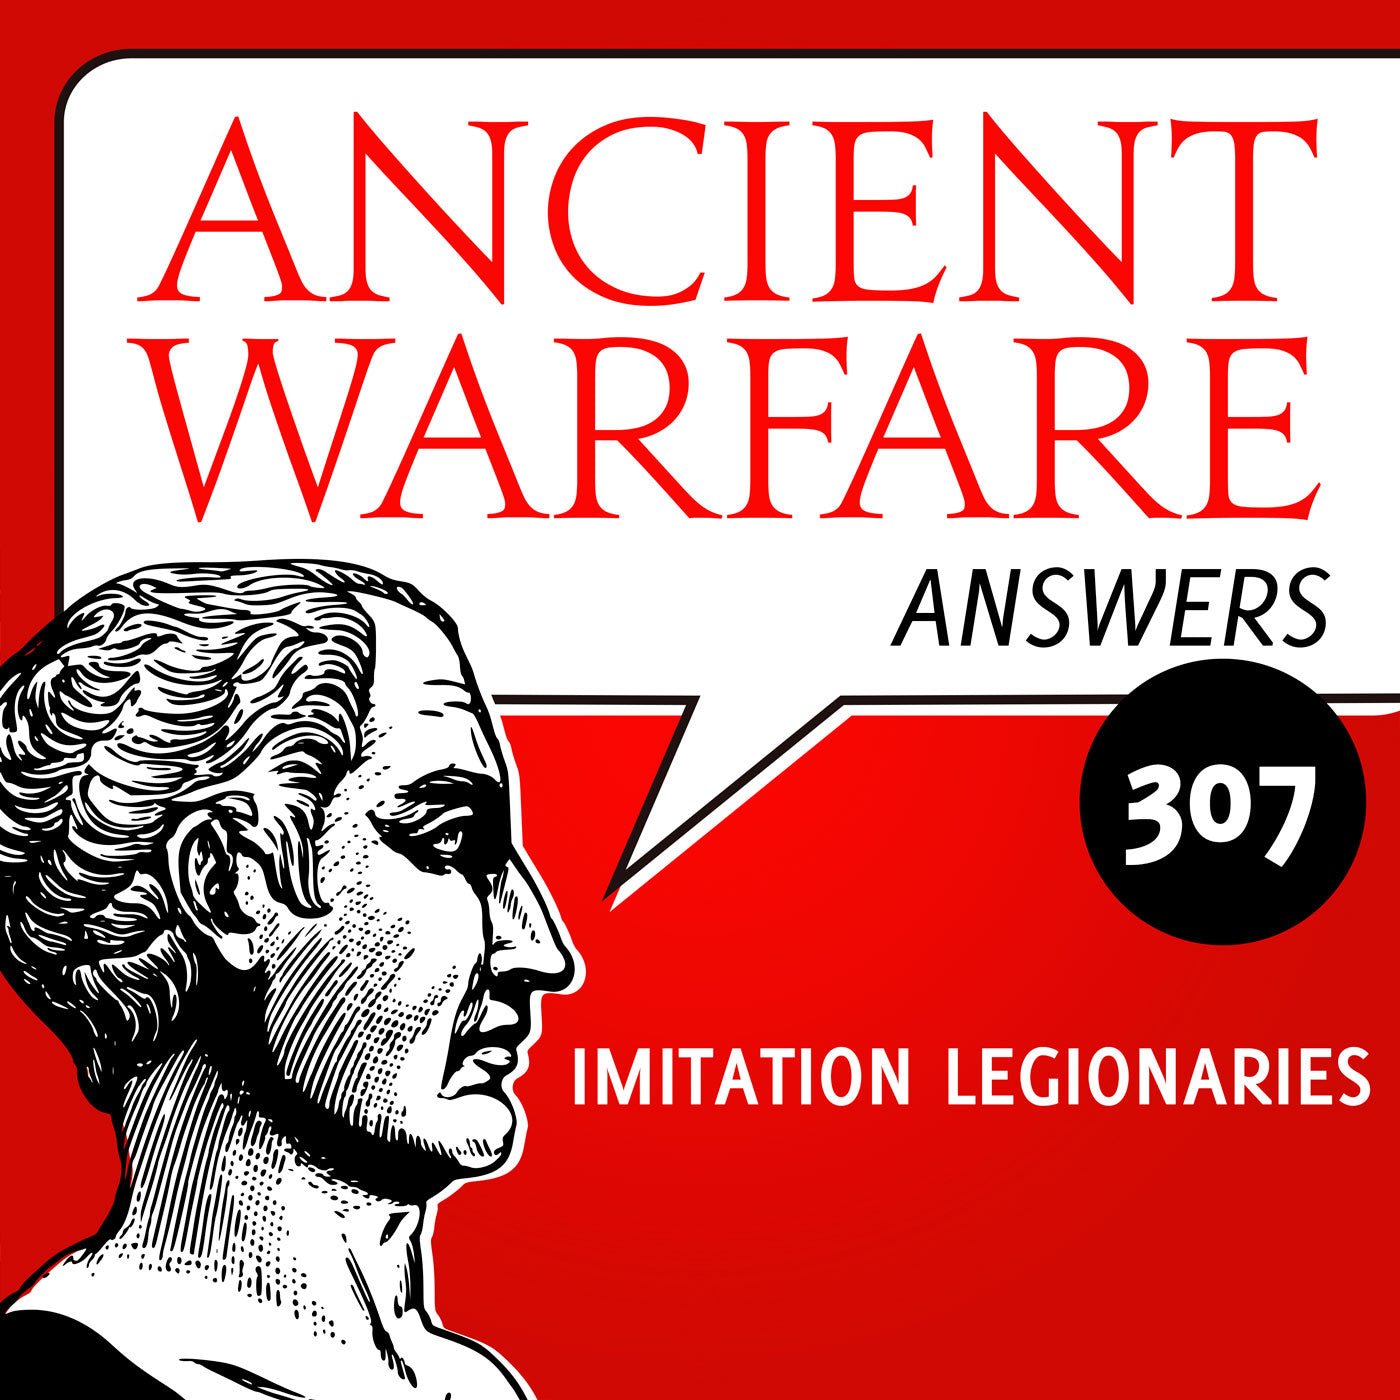 Ancient Warfare Answers (307):  Imitation legionaries